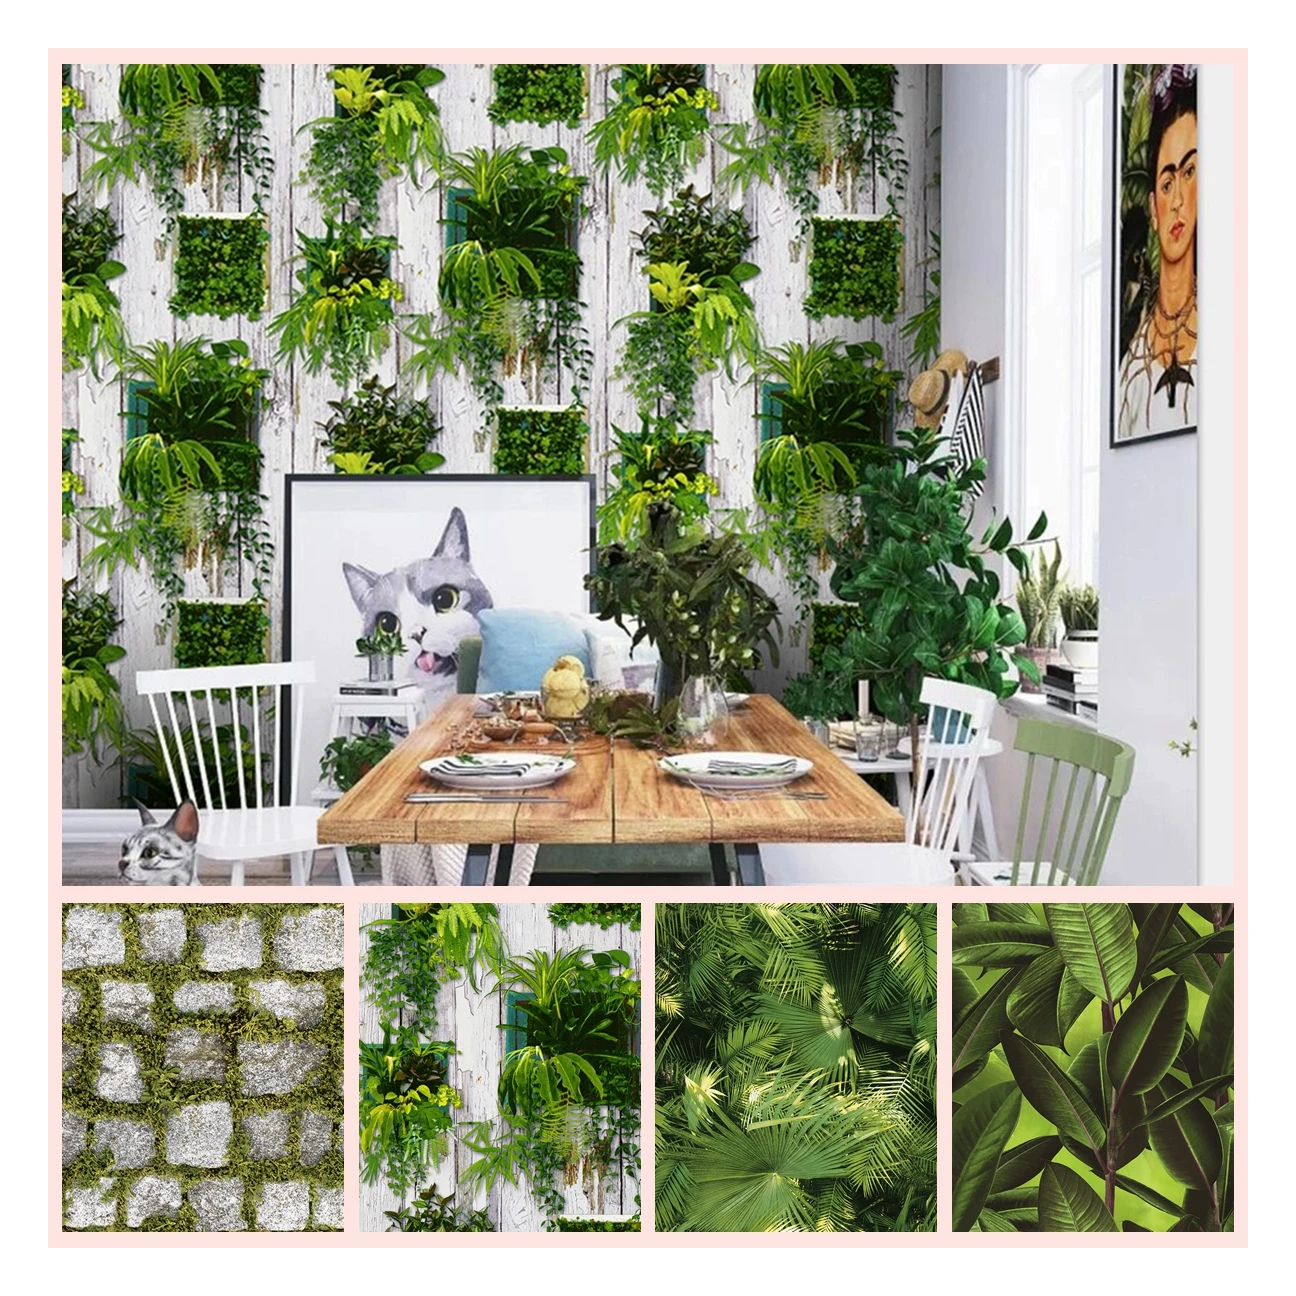 
Floral Design Interior 3d Wallpaper Pvc Wallpaper Forest Room wallpaper home decoration 